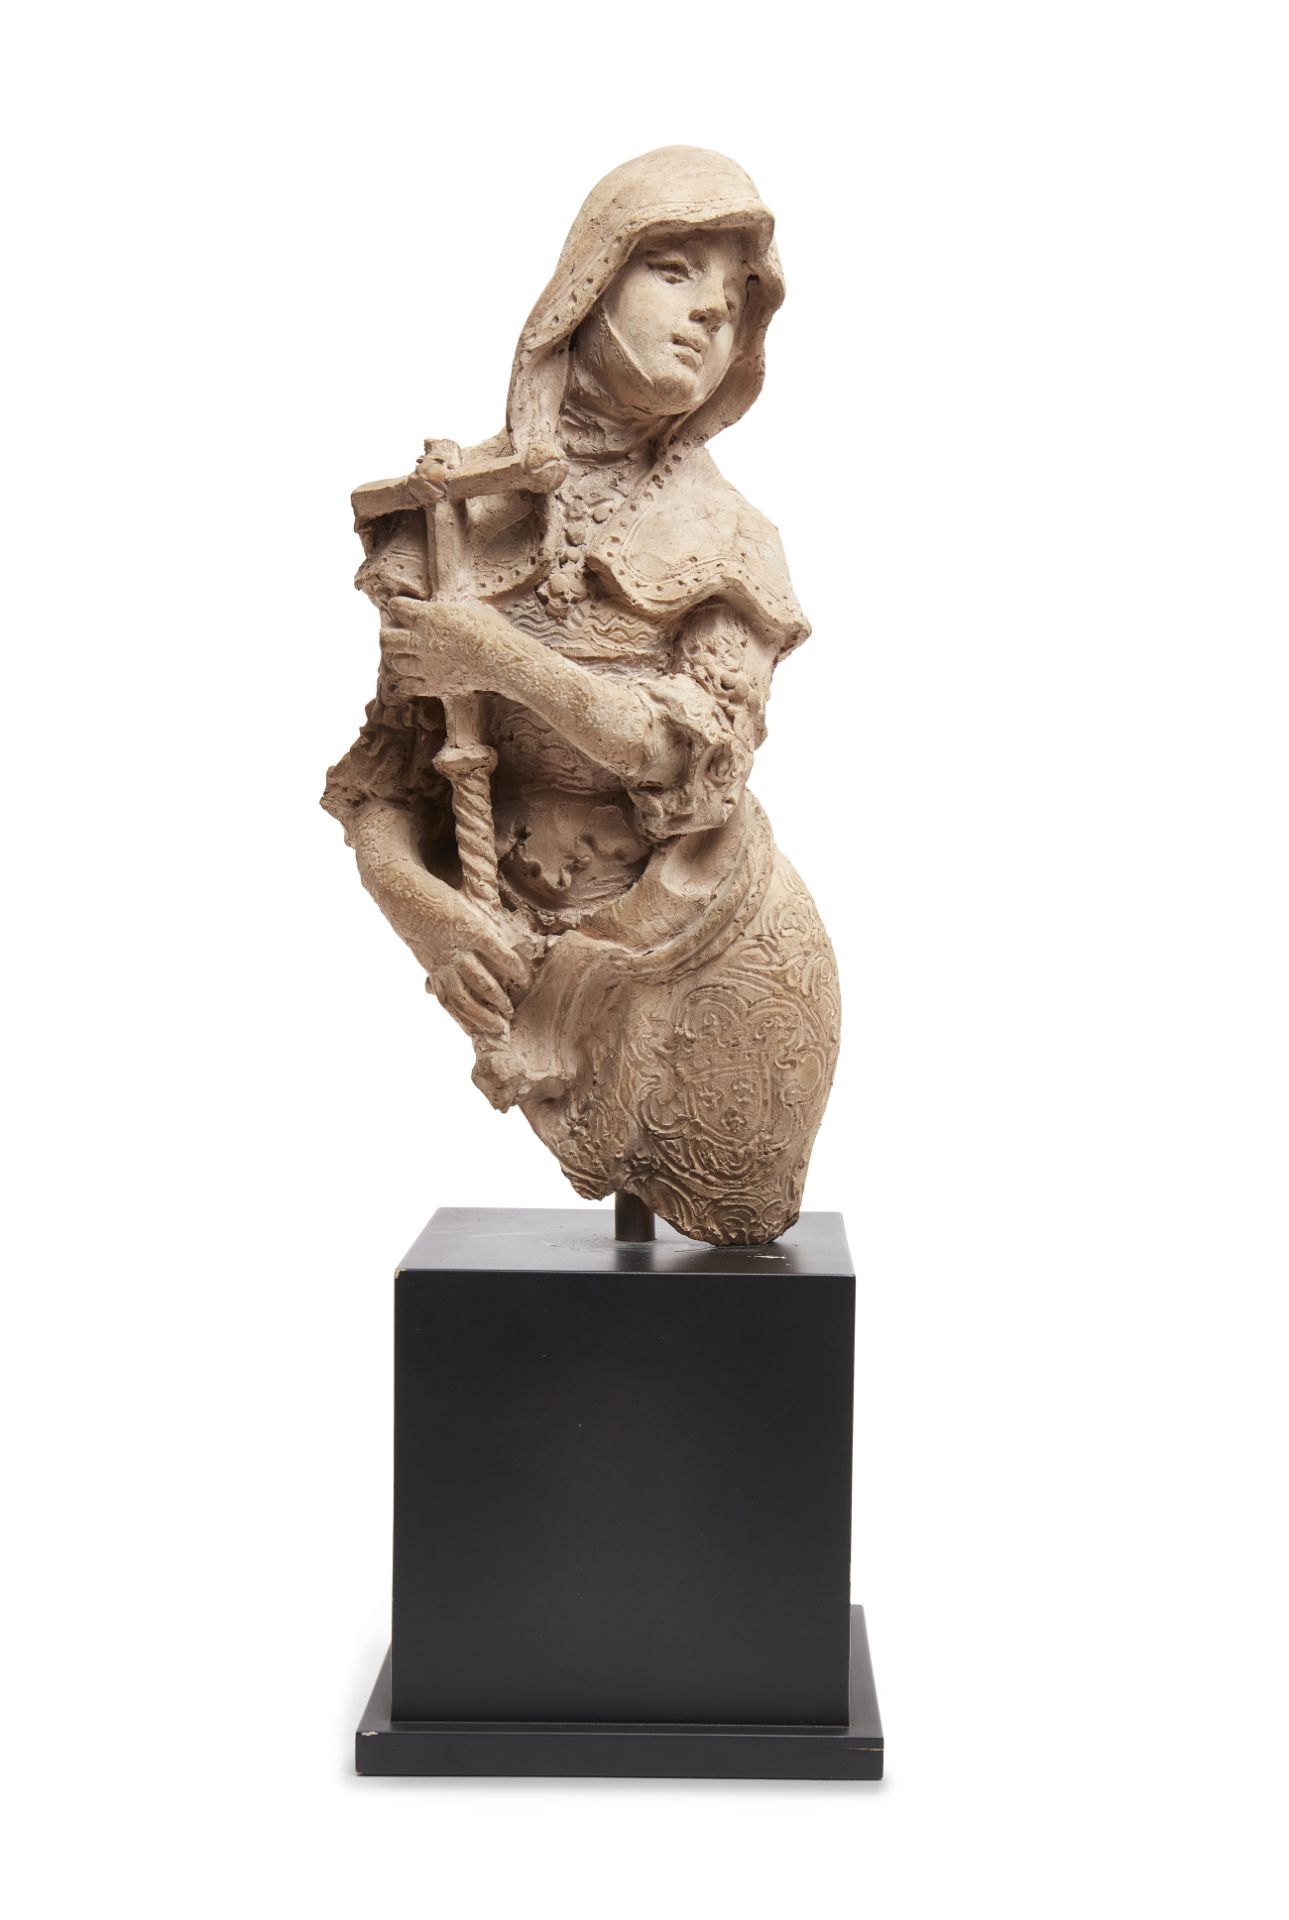 A French terracotta model of a female saint